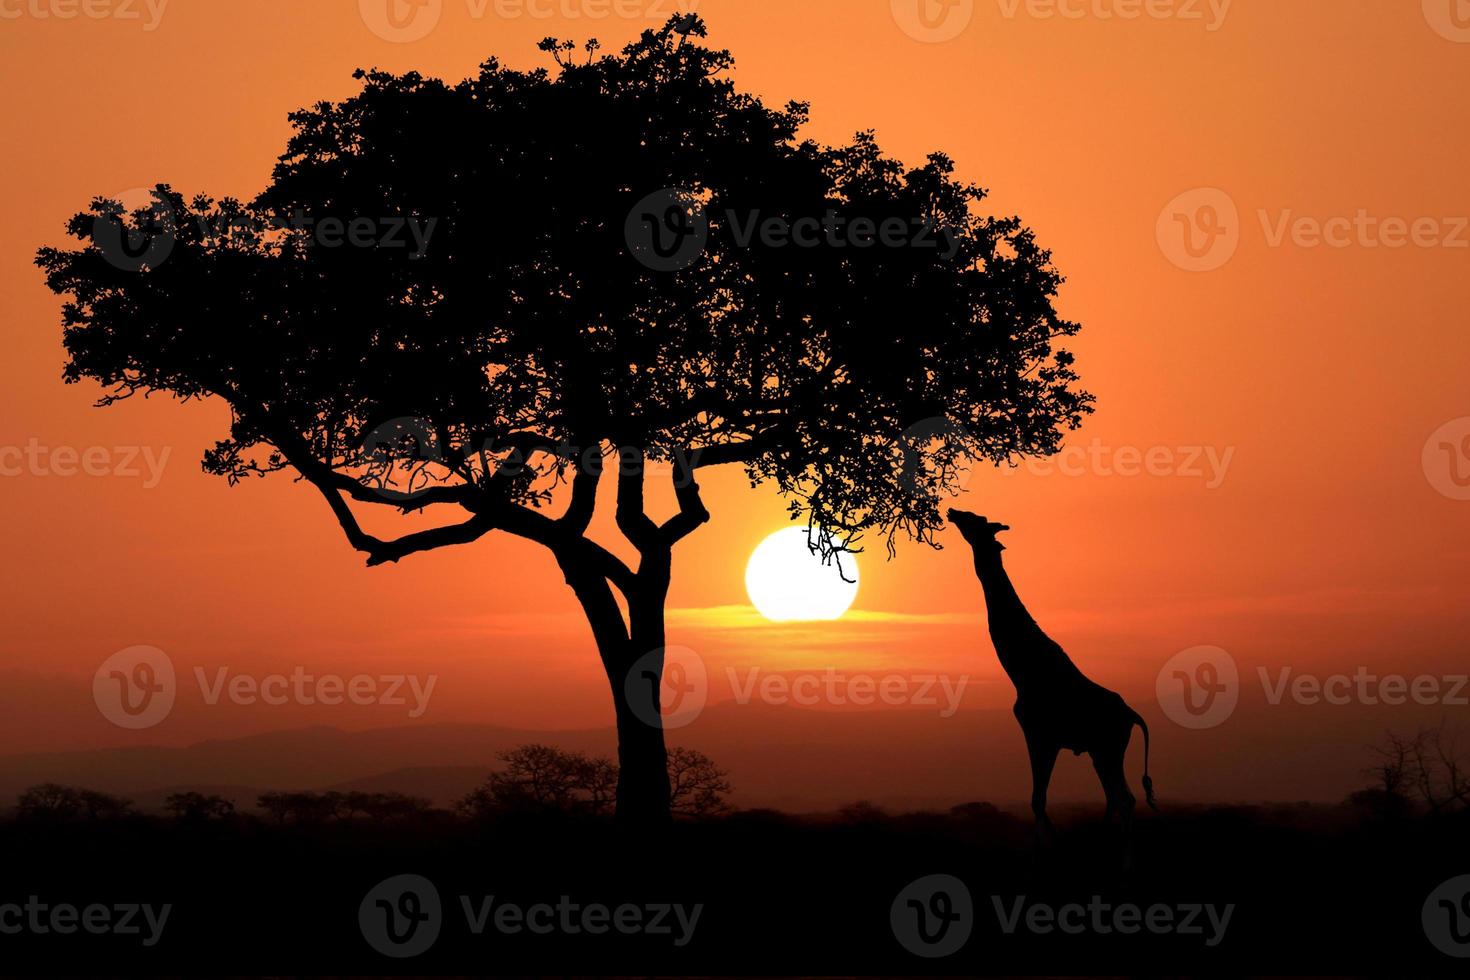 große südafrikanische giraffen bei sonnenuntergang in afrika foto